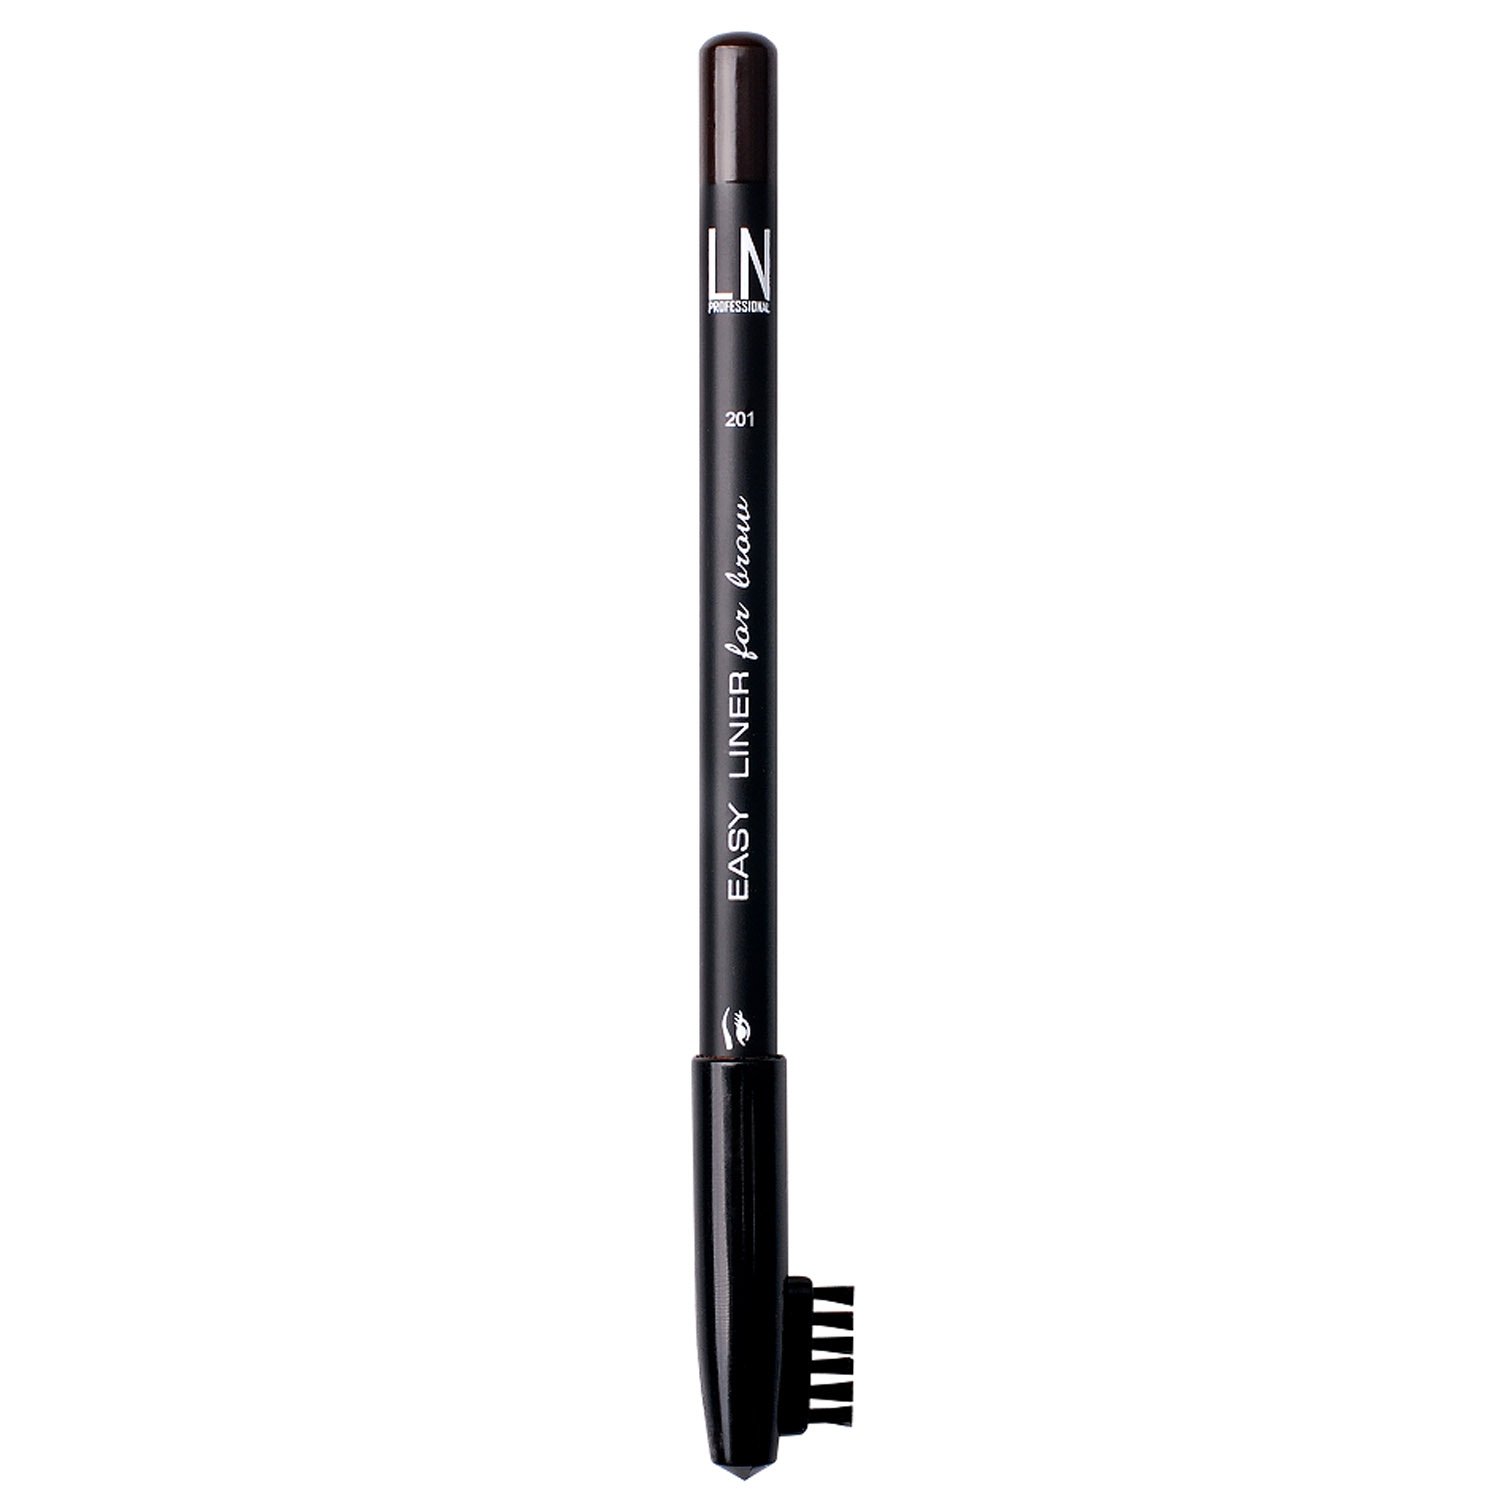 Карандаш для бровей LN Professional Easy Liner Brow Pencil тон 201, 1.7 г - фото 1